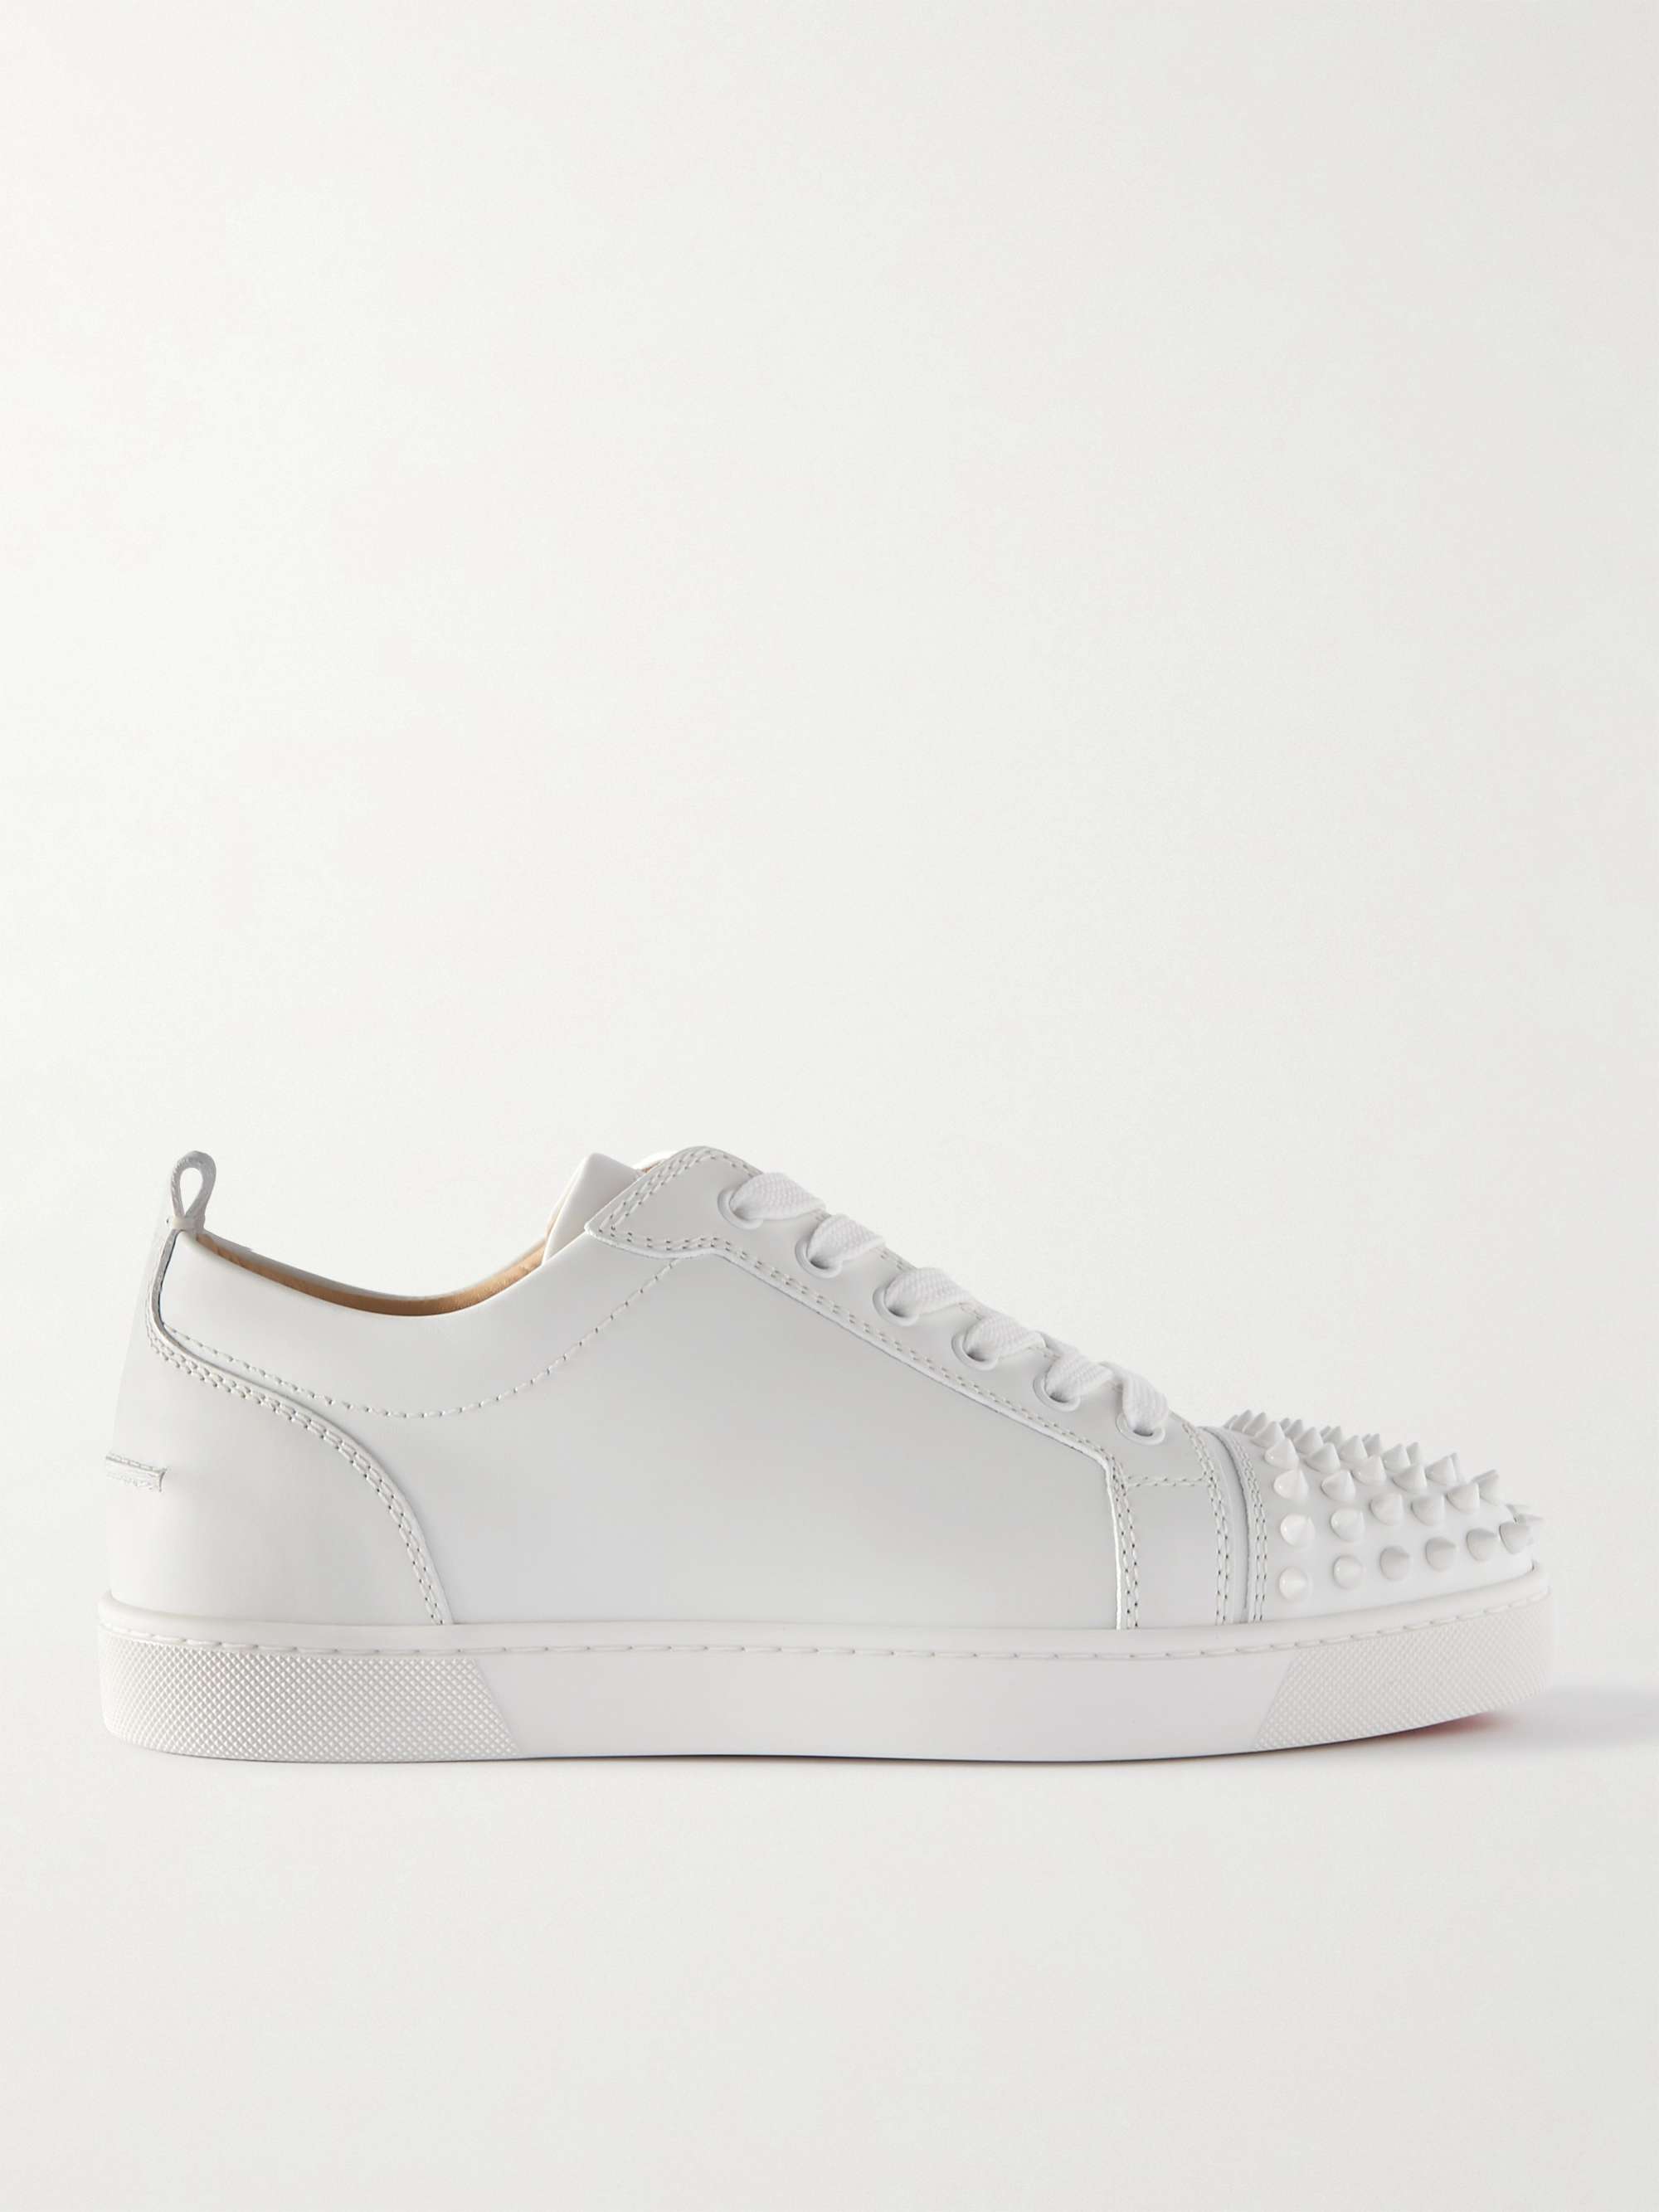 White Louis Junior Spikes Cap-Toe Leather Sneakers | CHRISTIAN LOUBOUTIN |  MR PORTER